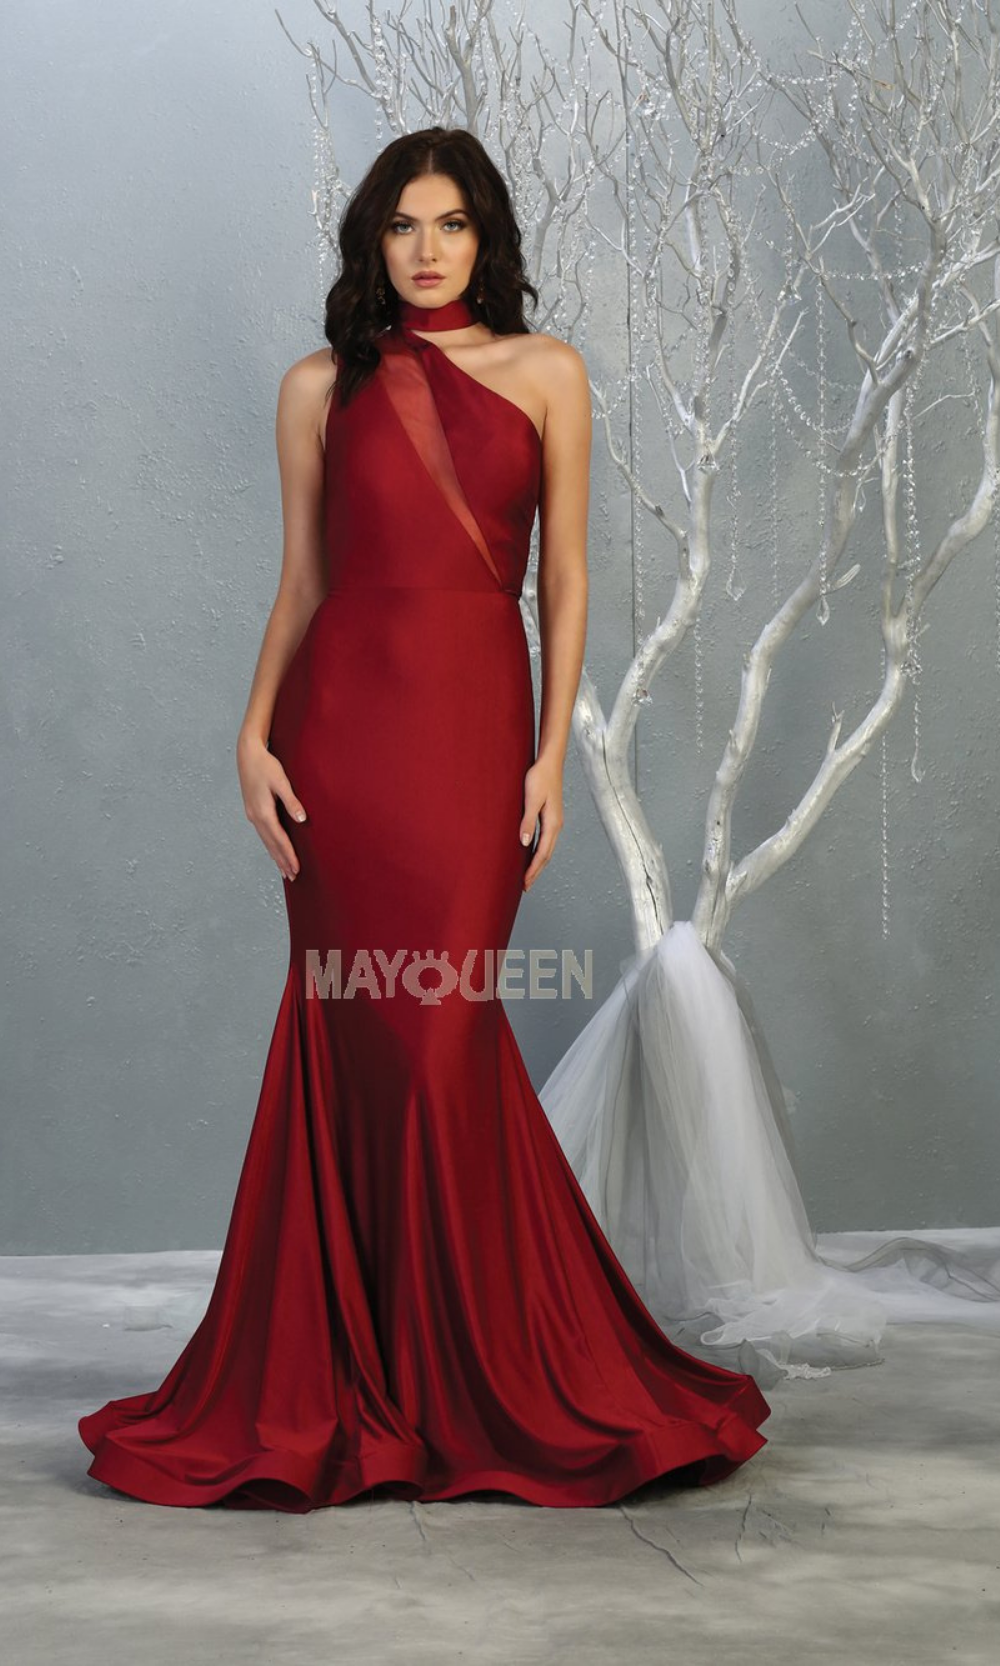 May Queen MQ1773 long burgundy dress